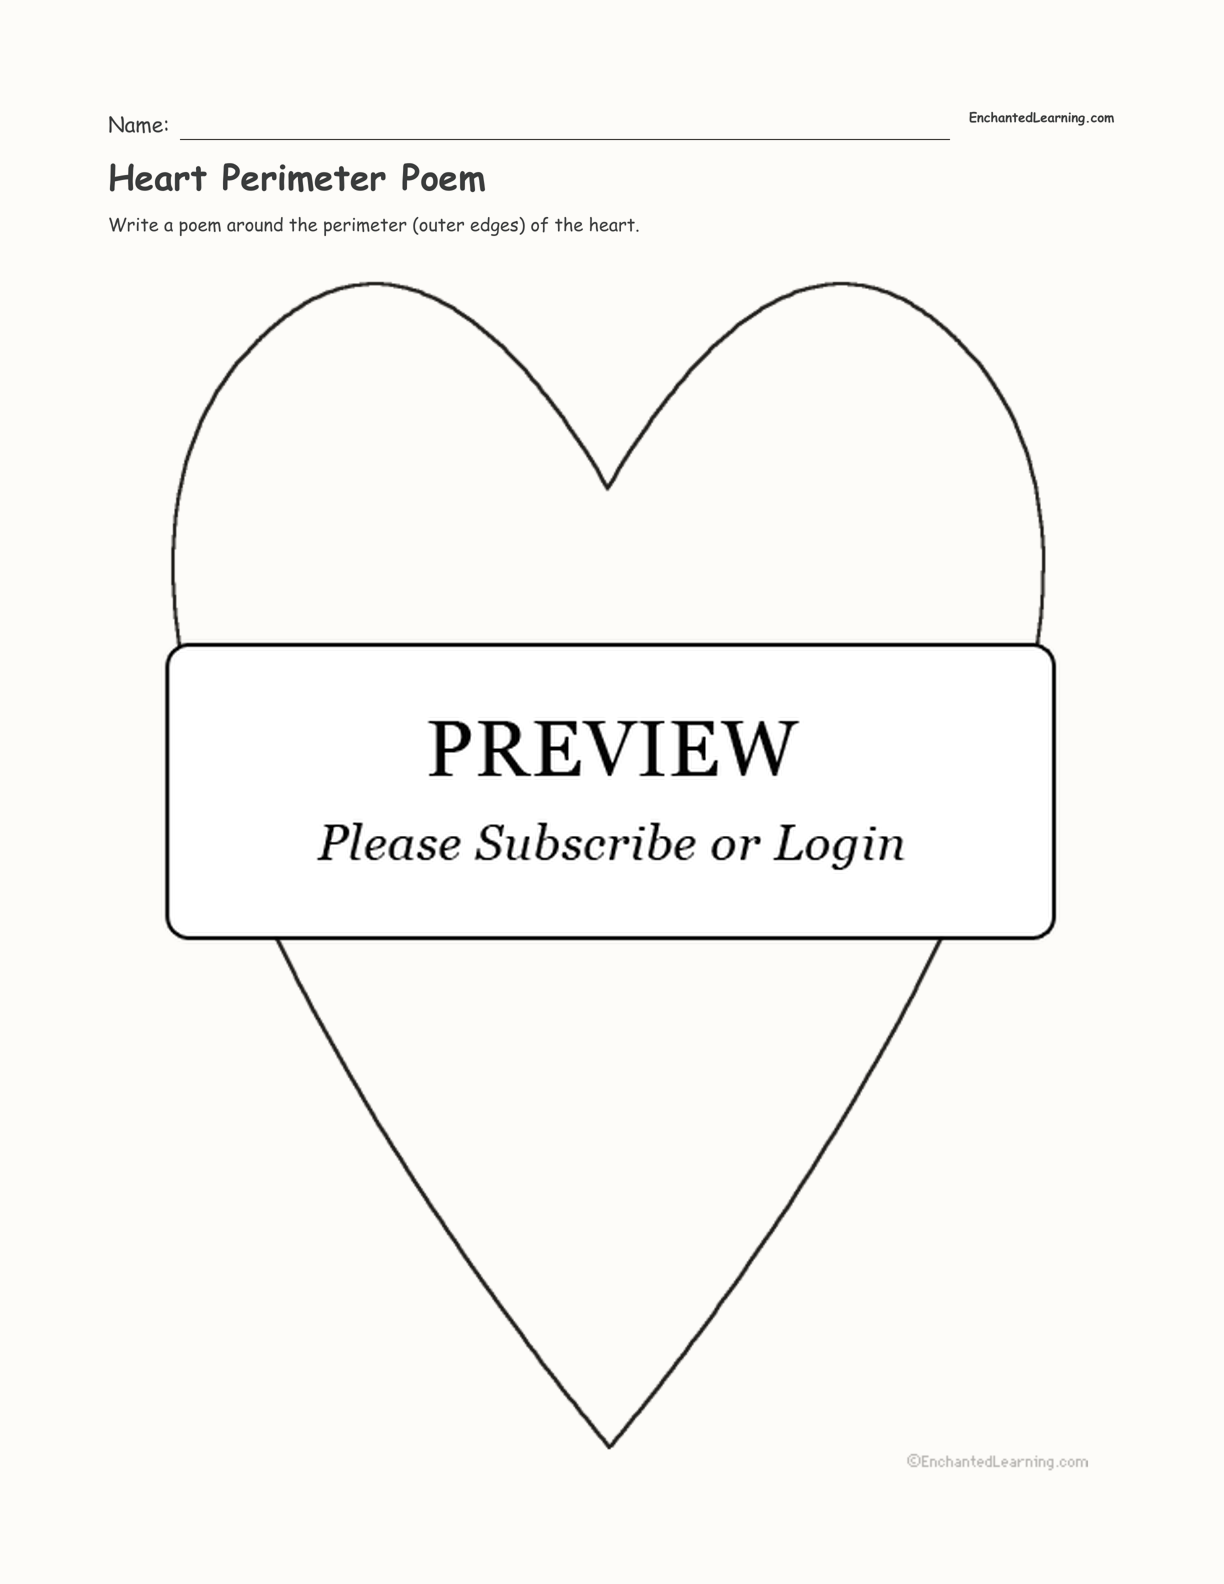 Heart Perimeter Poem interactive worksheet page 1